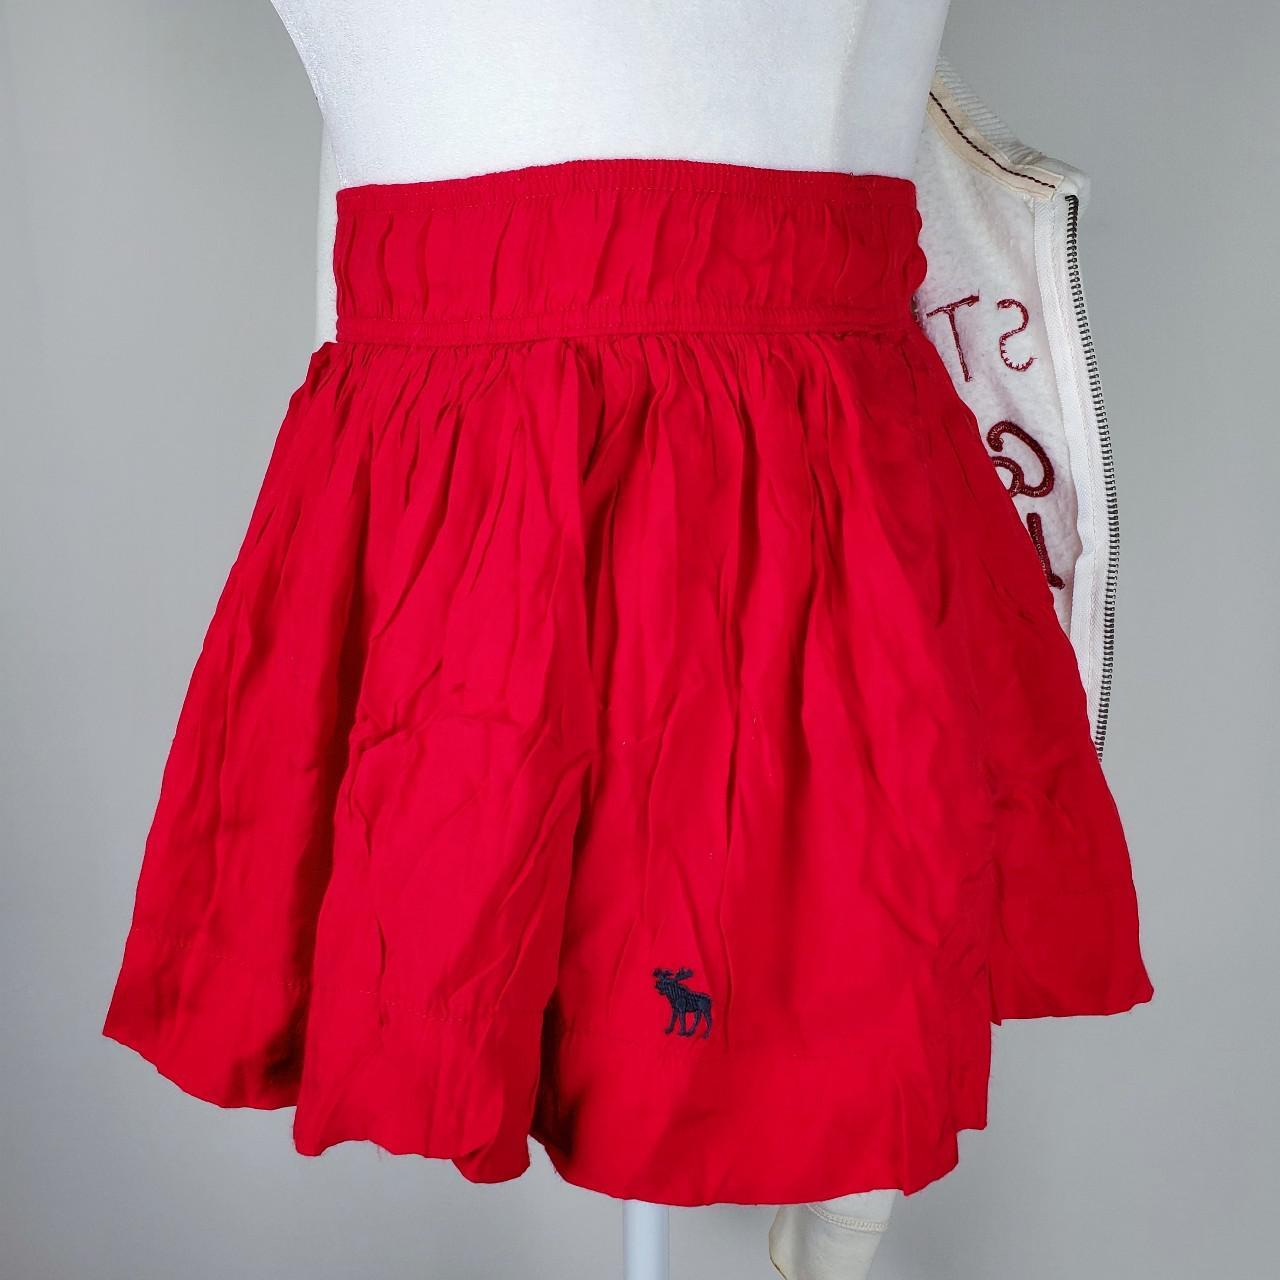 Product Image 2 - Red Miniskirt | Red Schoolgirl